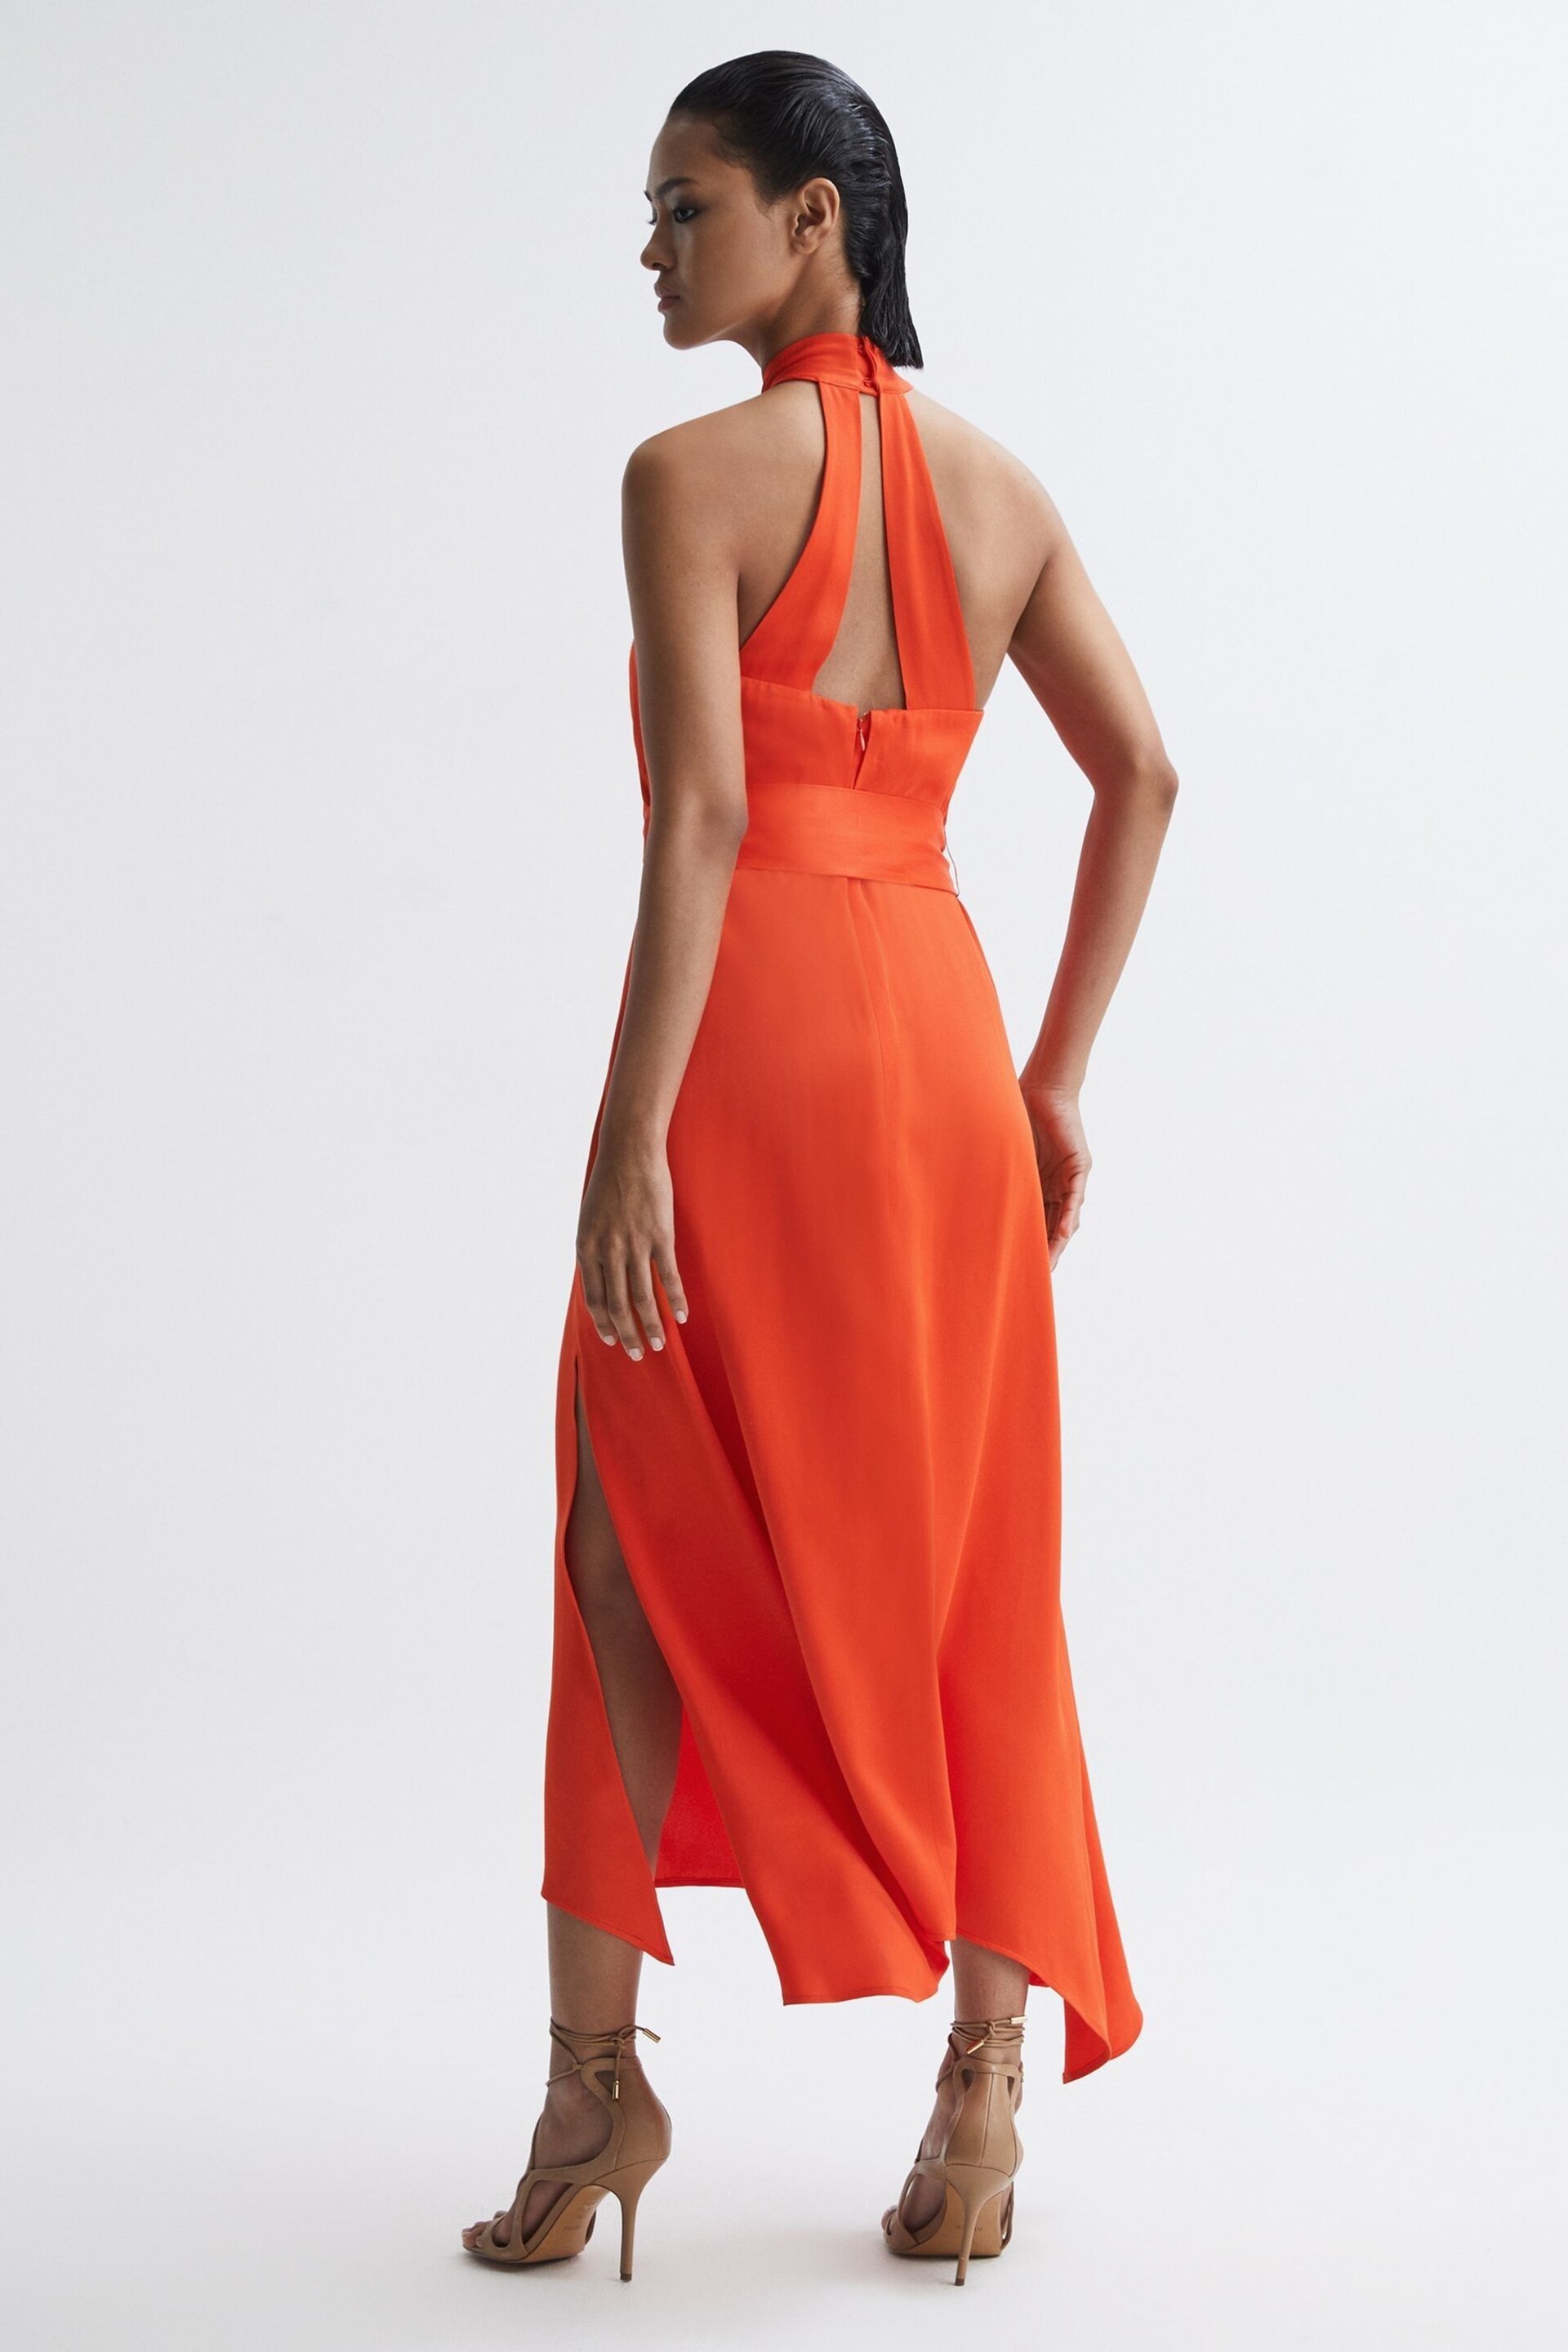 Reiss Orange Evelyn Fitted Halter Neck Midi Dress - Image 5 of 7